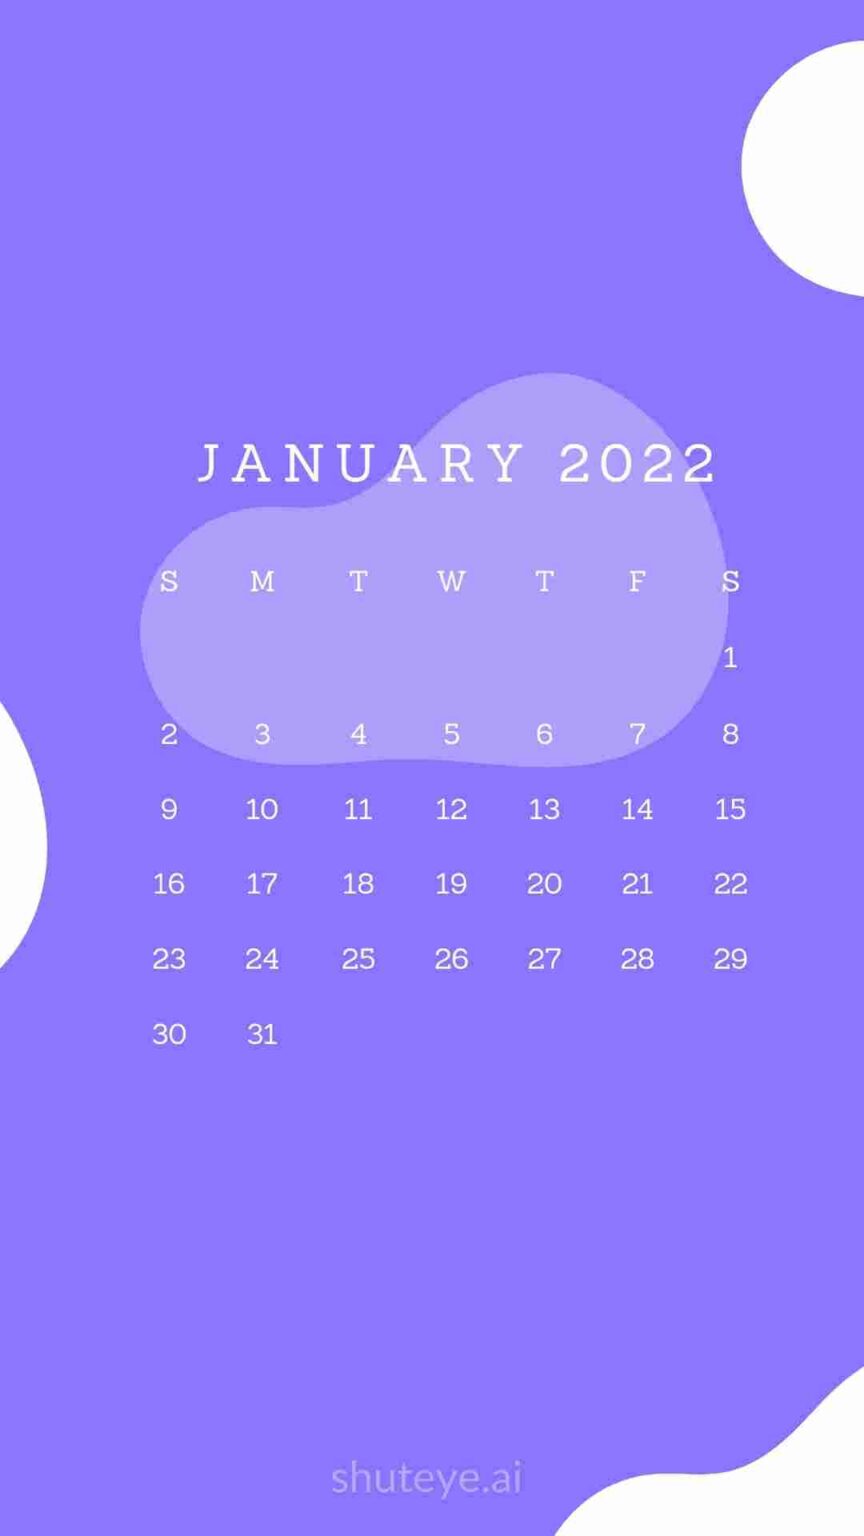 printable-january-calendar-2022-free-printable-calendars-shuteye